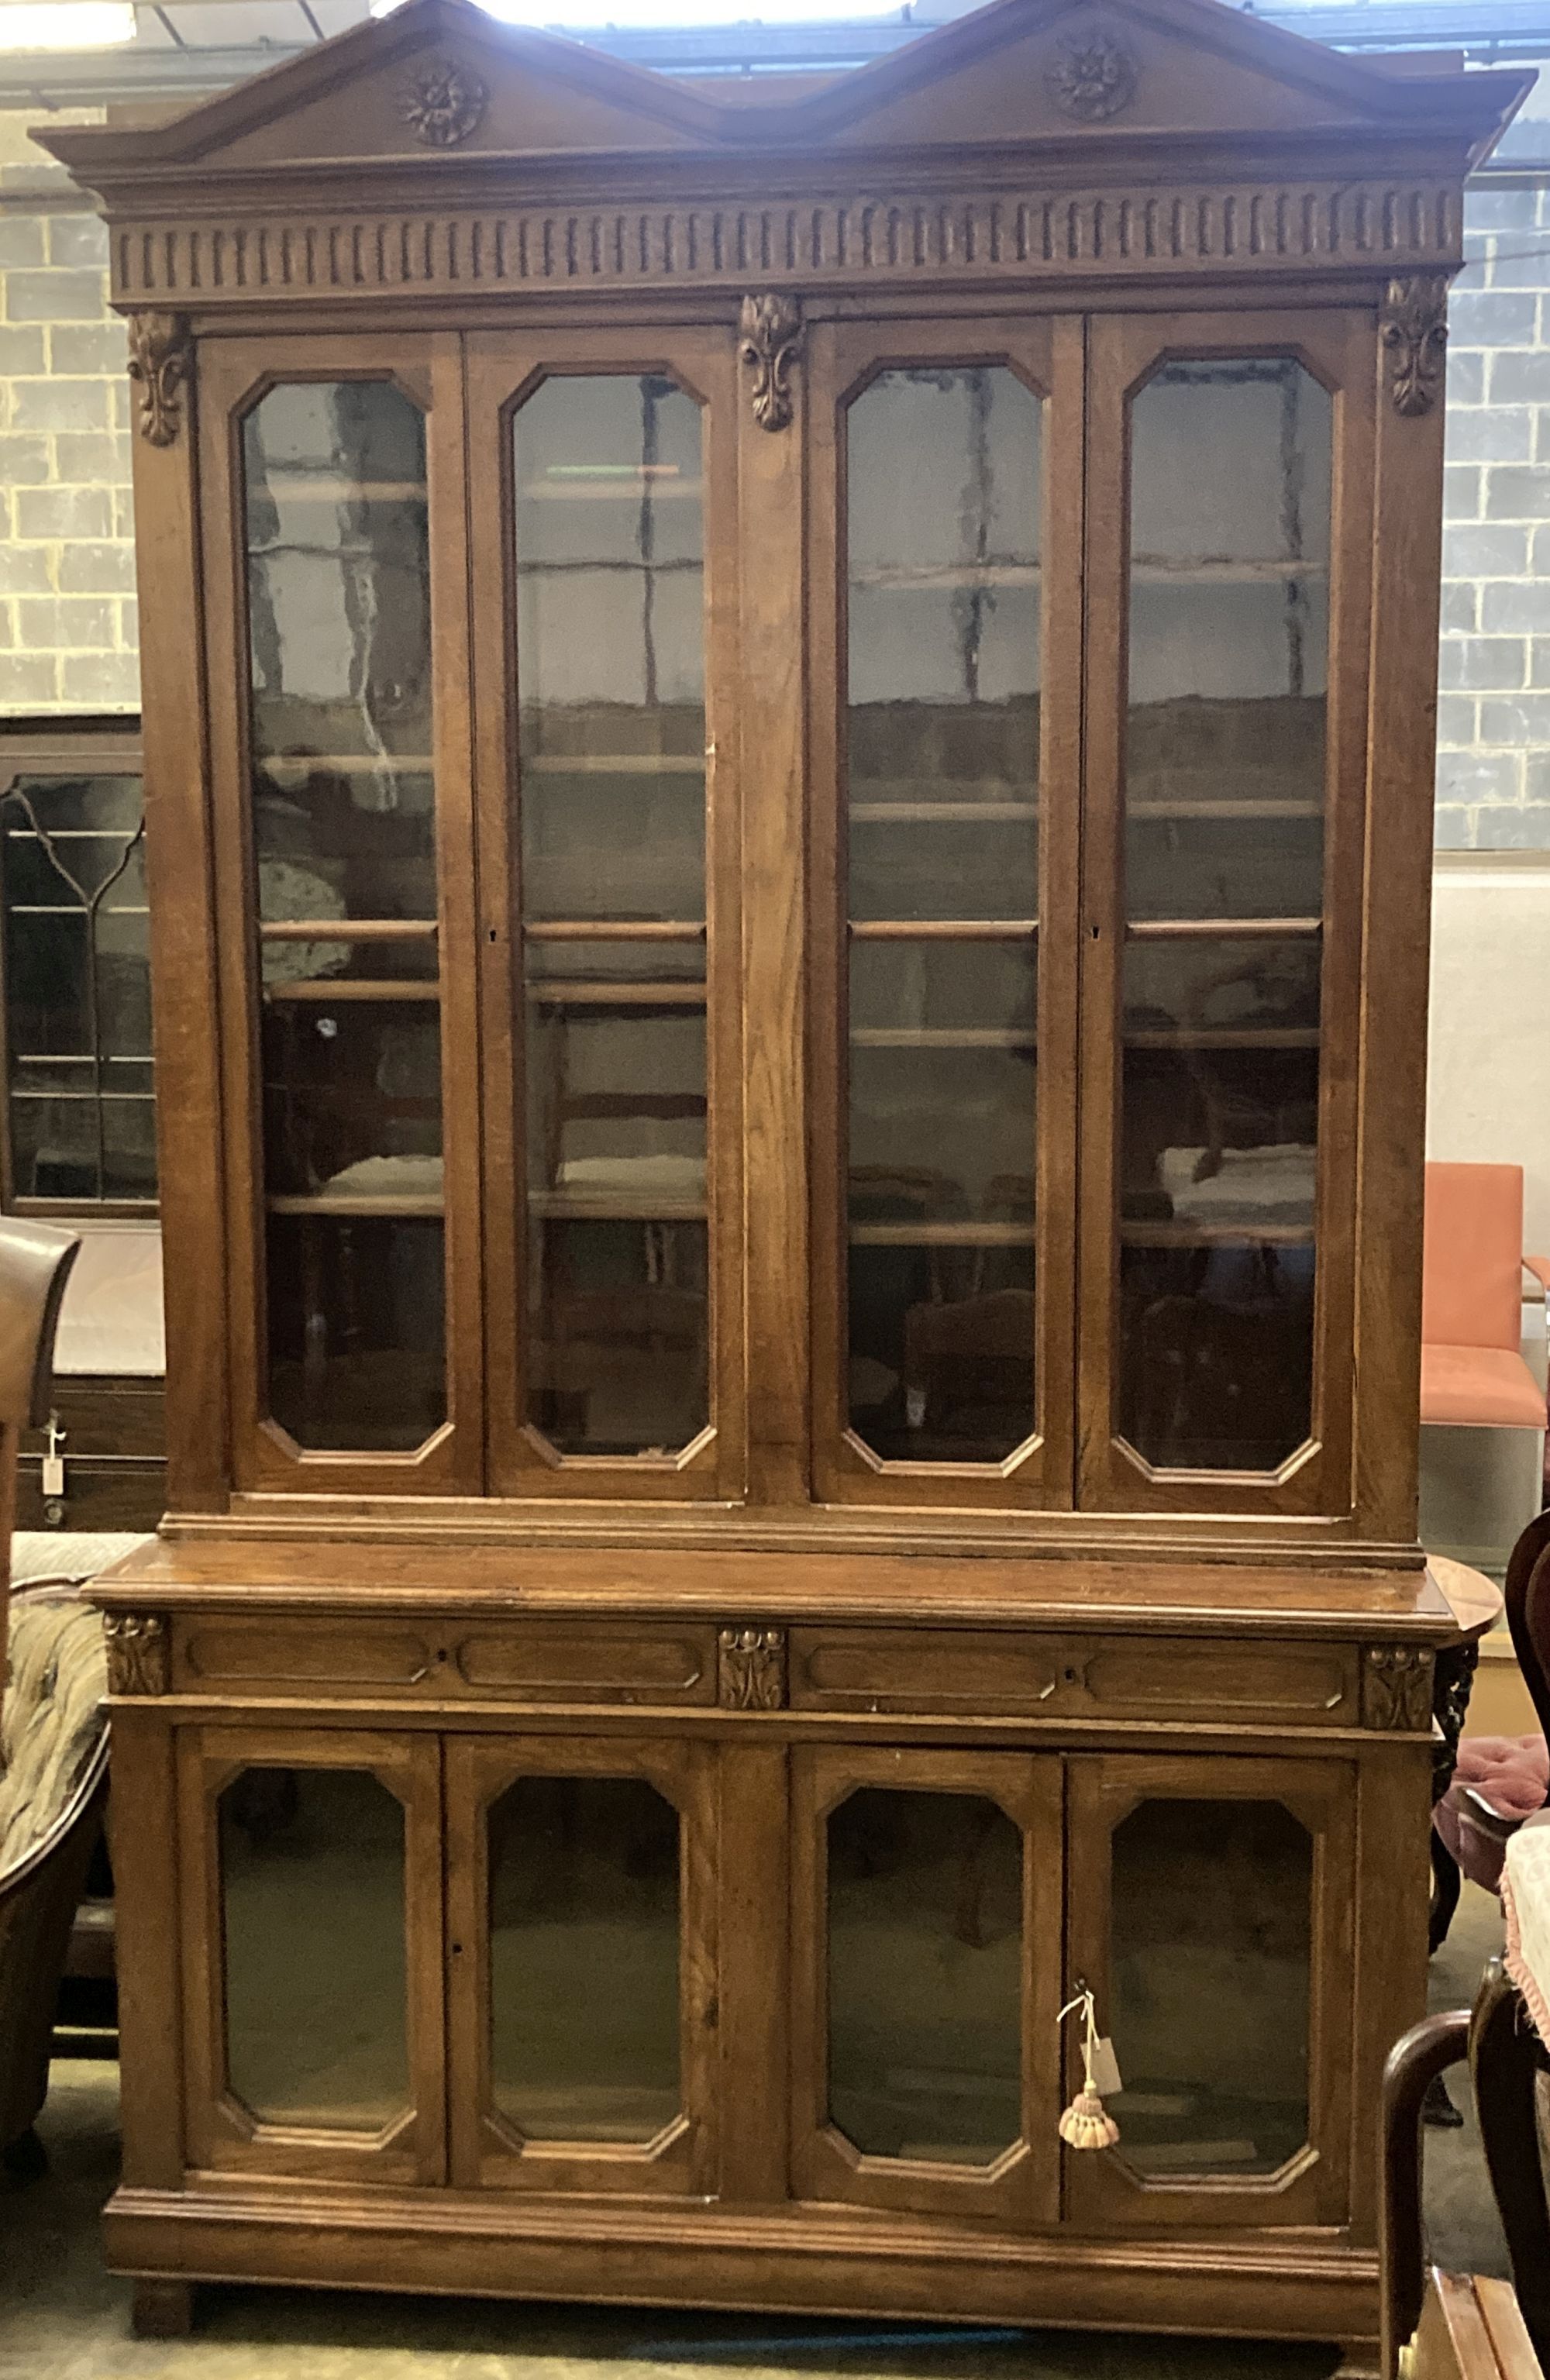 A Victorian oak library bookcase, length 160cm, depth 54cm, height 280cm